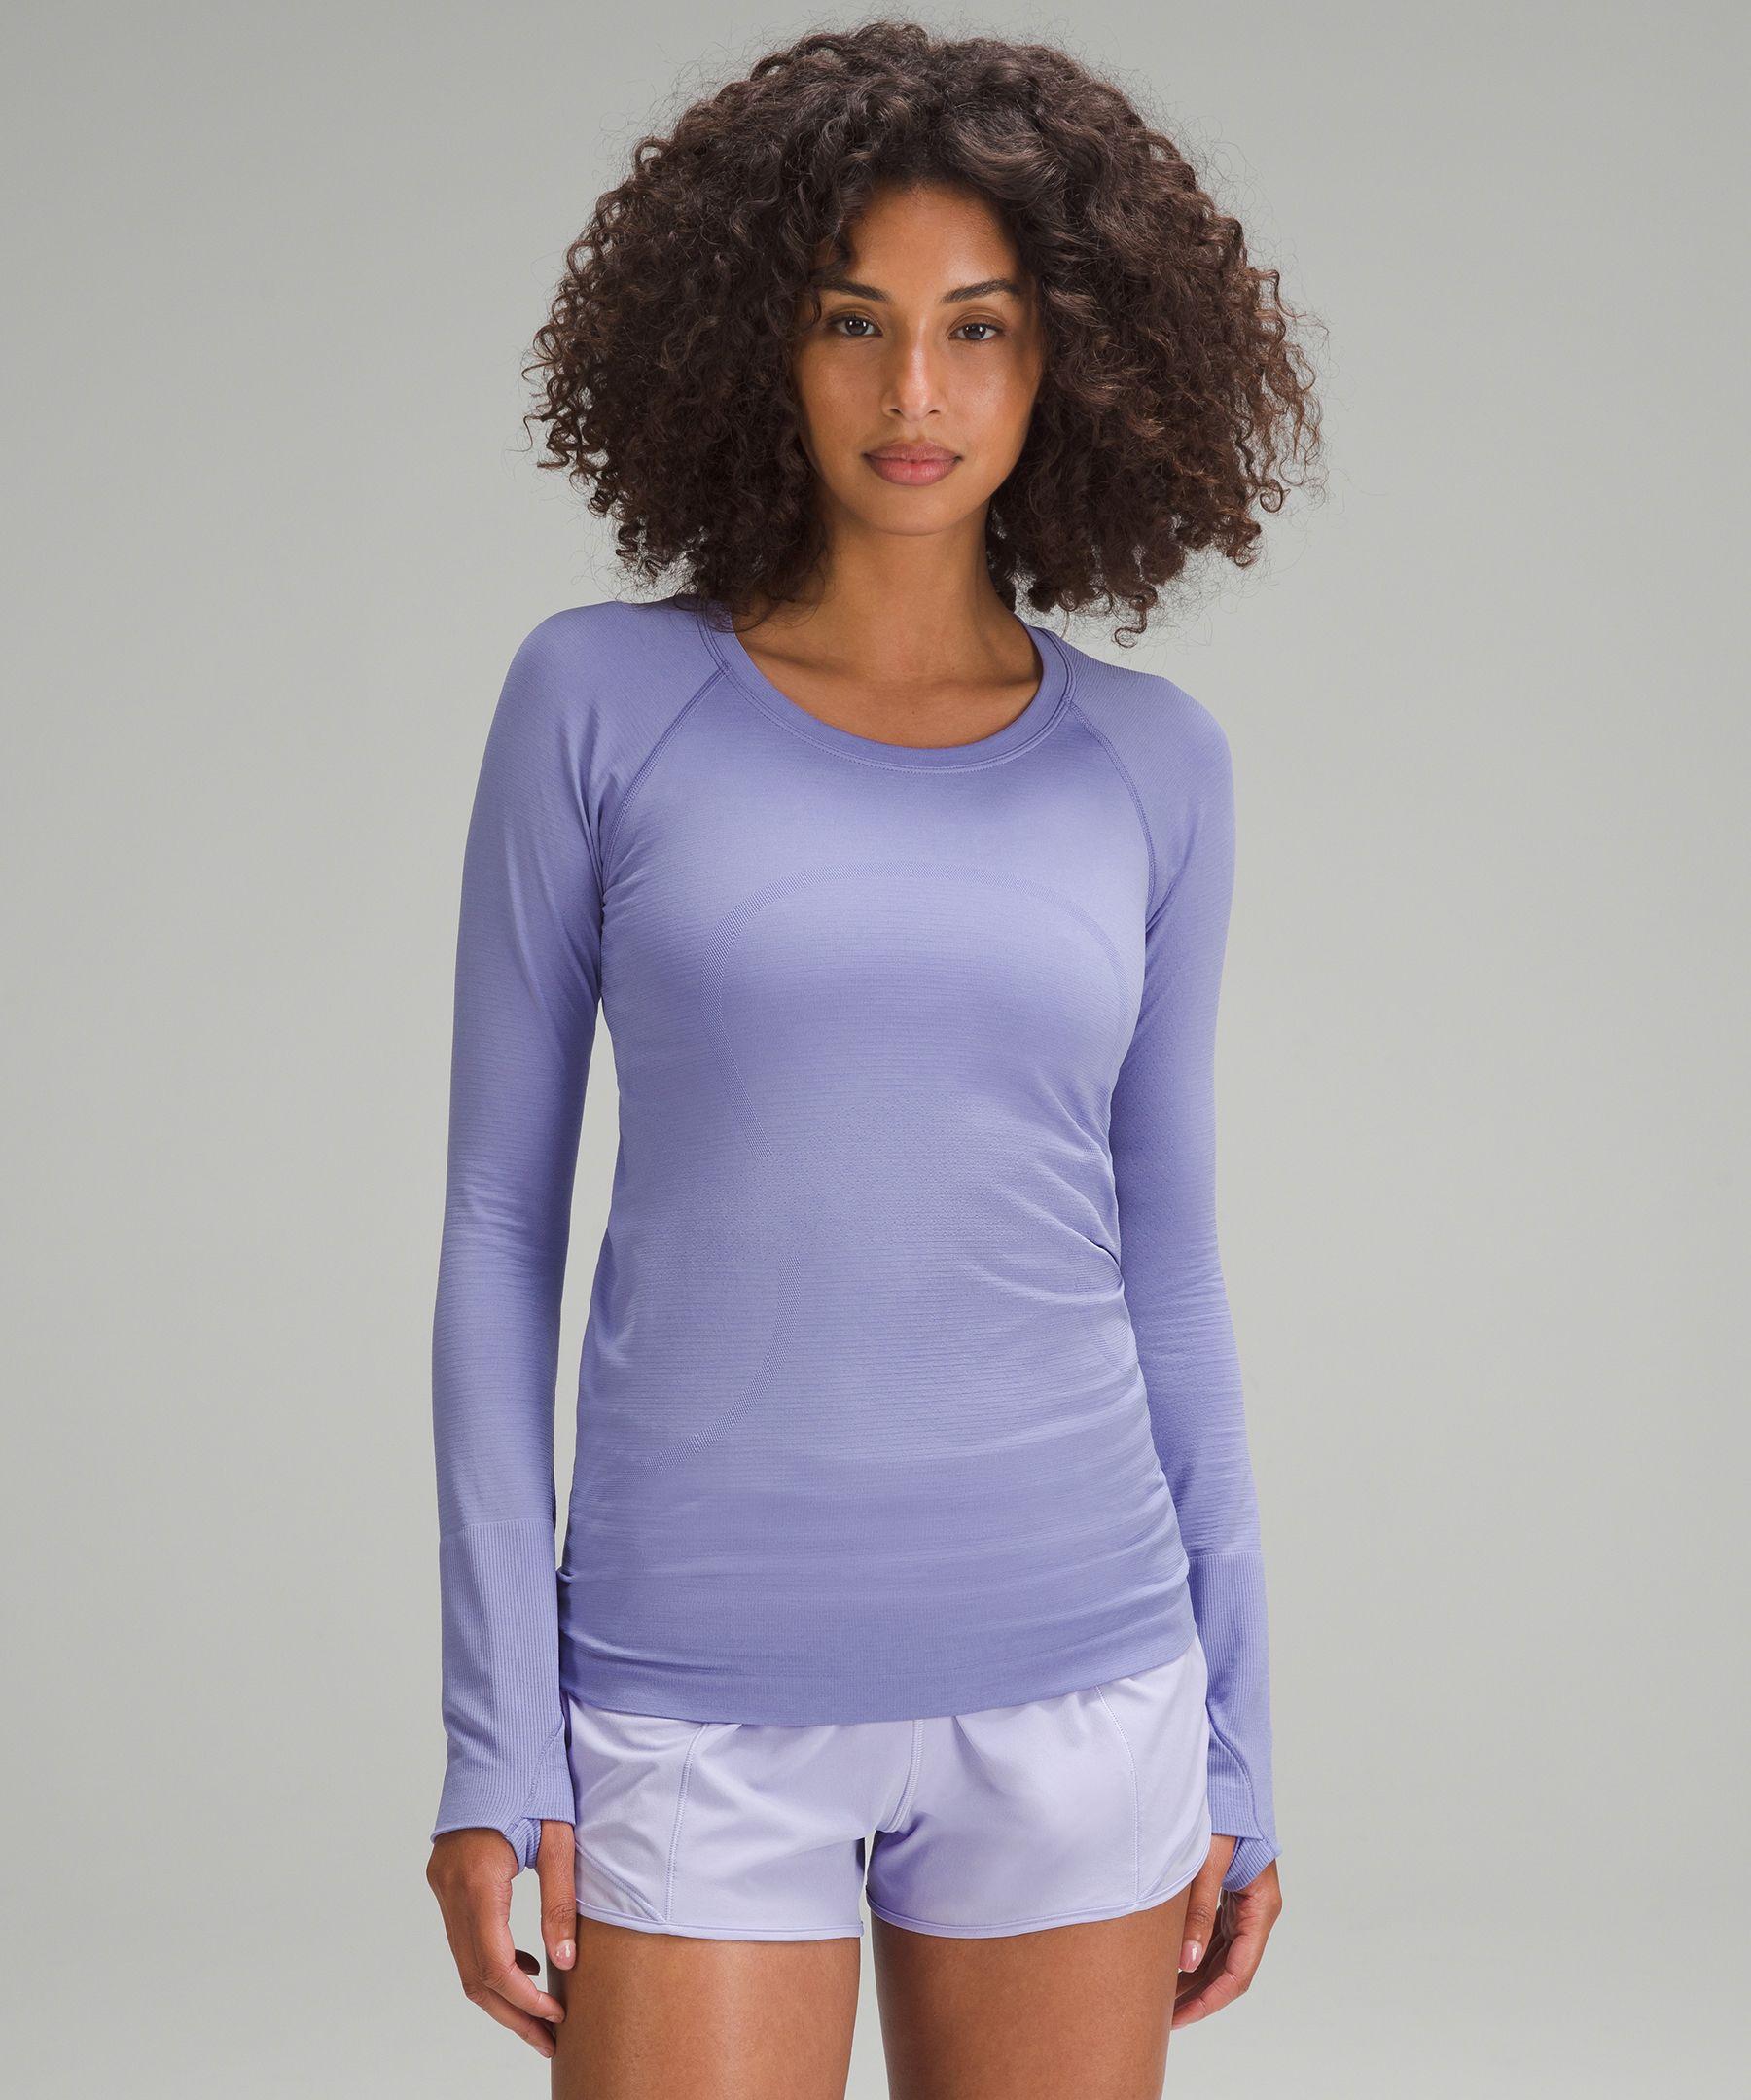 https://cdna.lystit.com/photos/lululemon/603d0b33/lululemon-athletica-designer-Dark-LavenderDark-Lavender-Swiftly-Tech-Long-sleeve-Shirt-20.jpeg